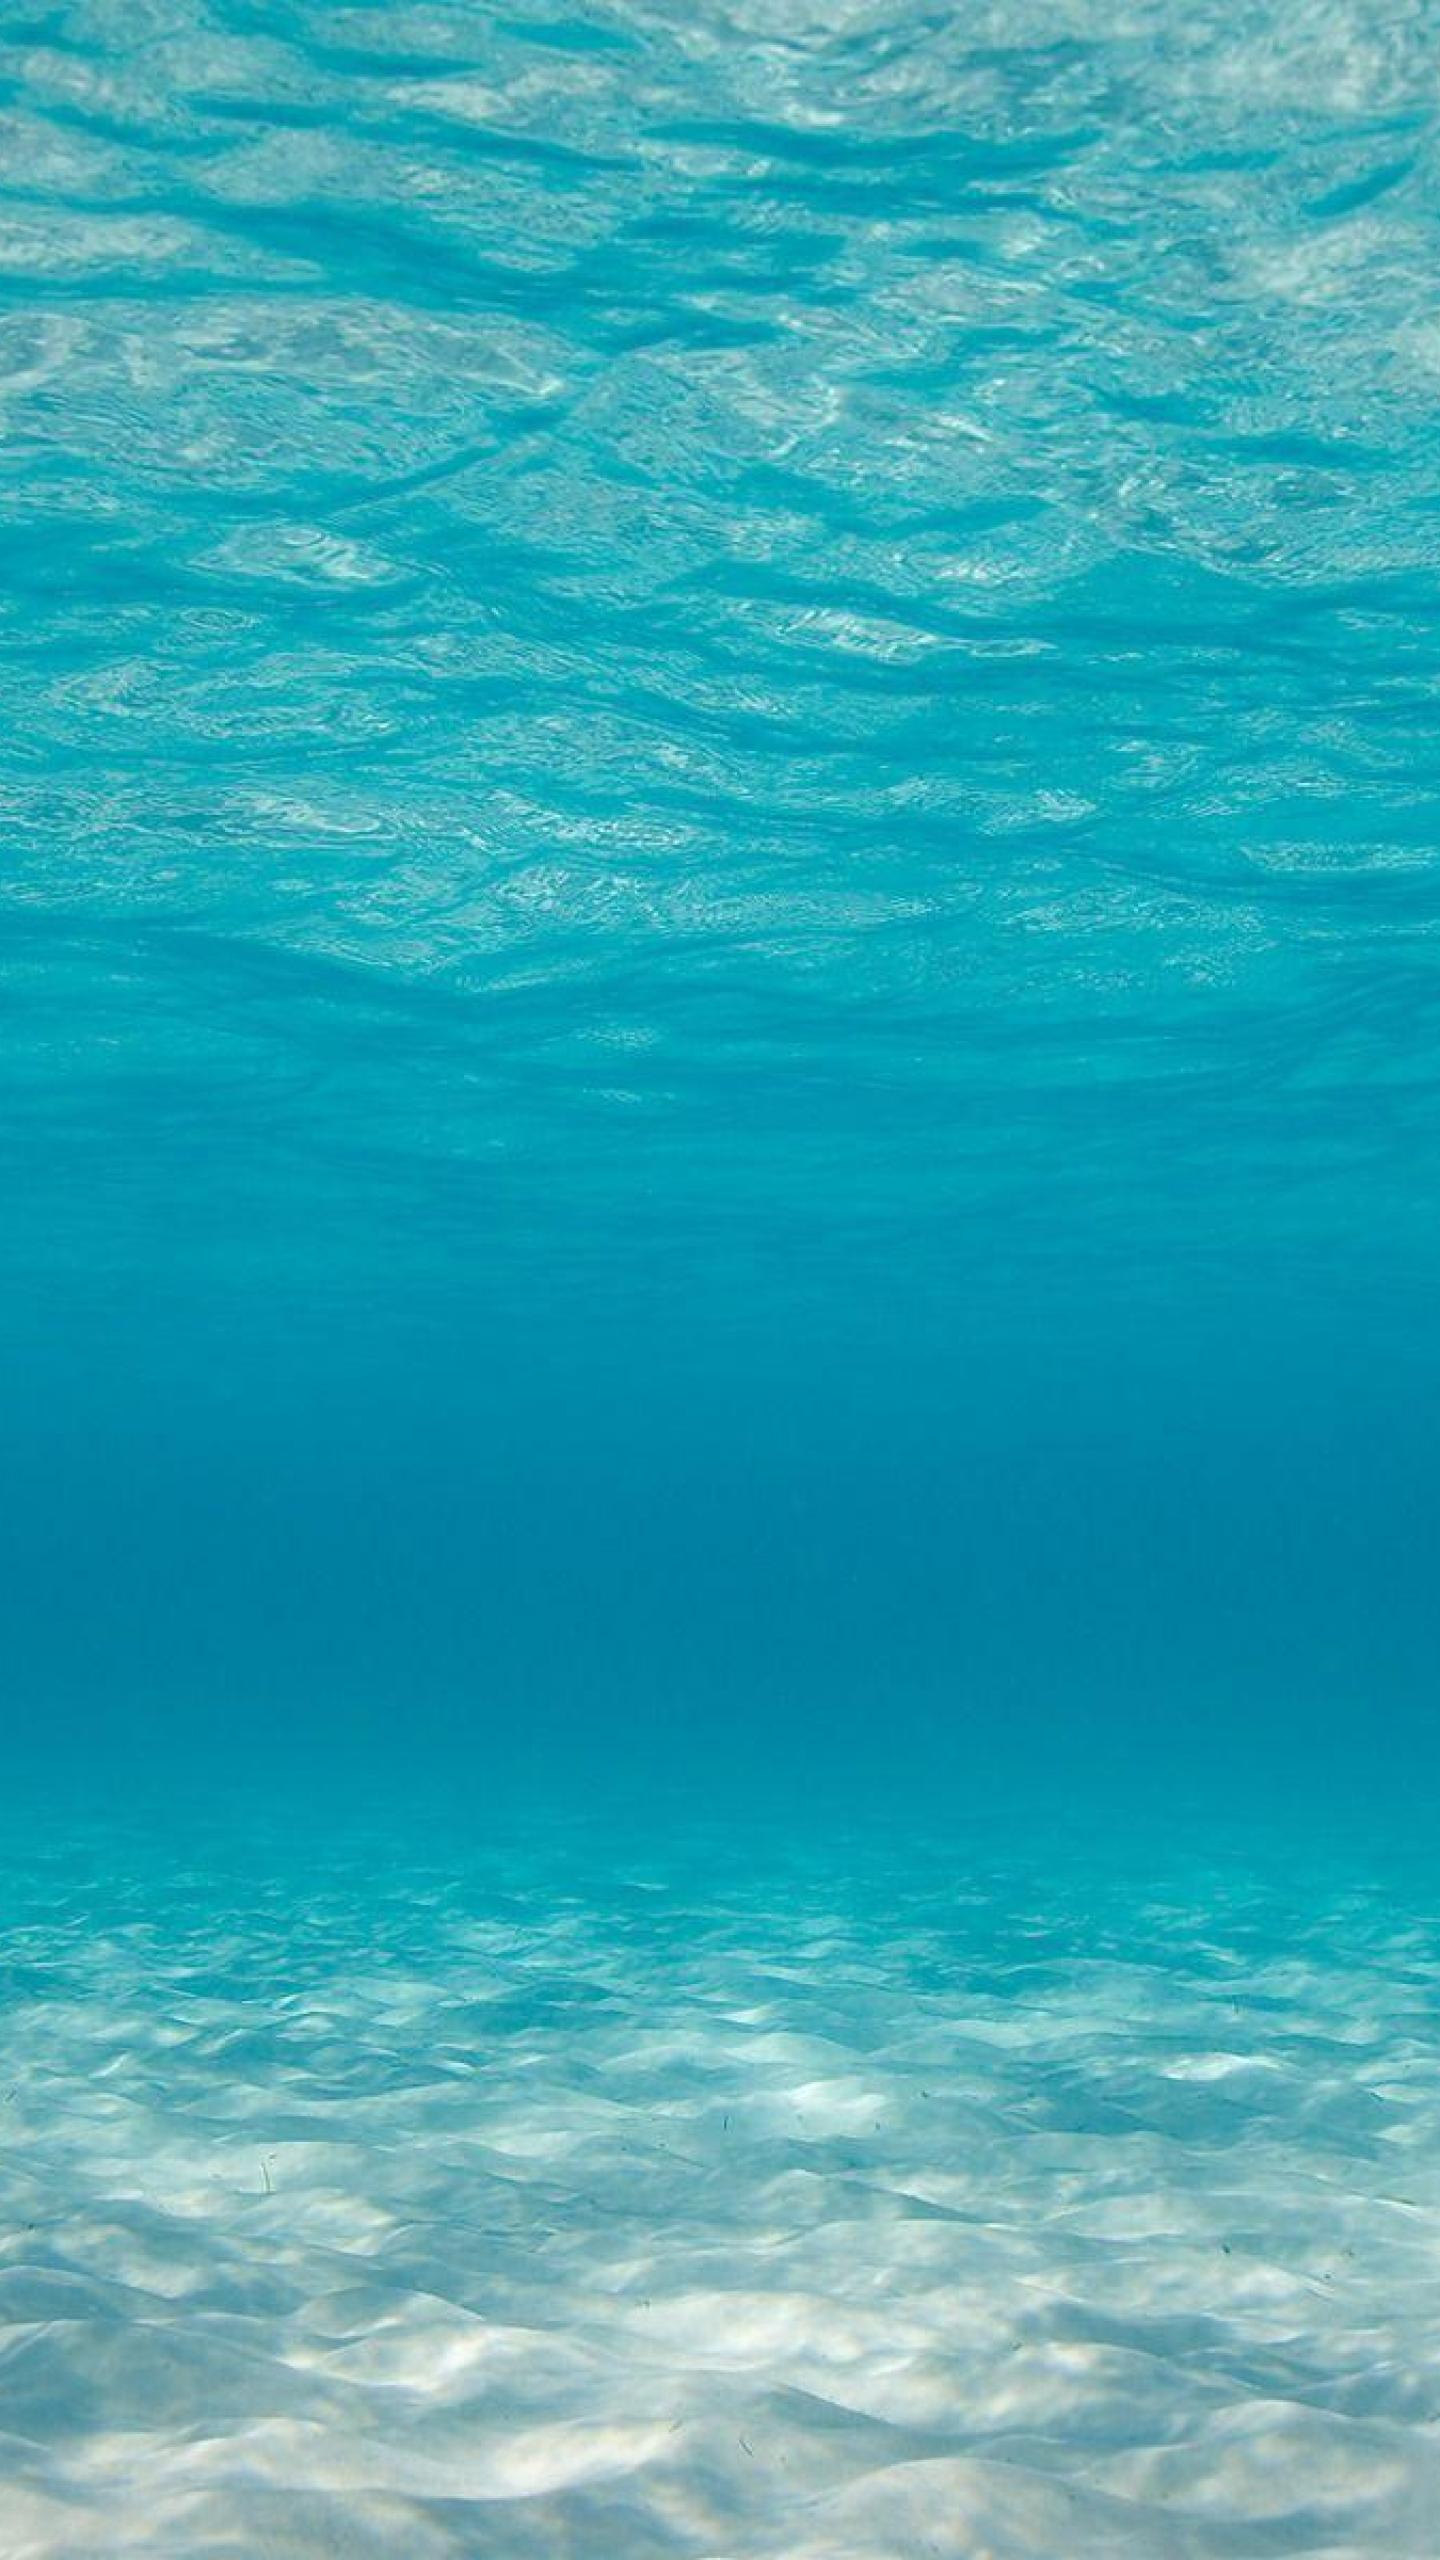 Ocean Background Underwater Related Keywords Amp Suggestions